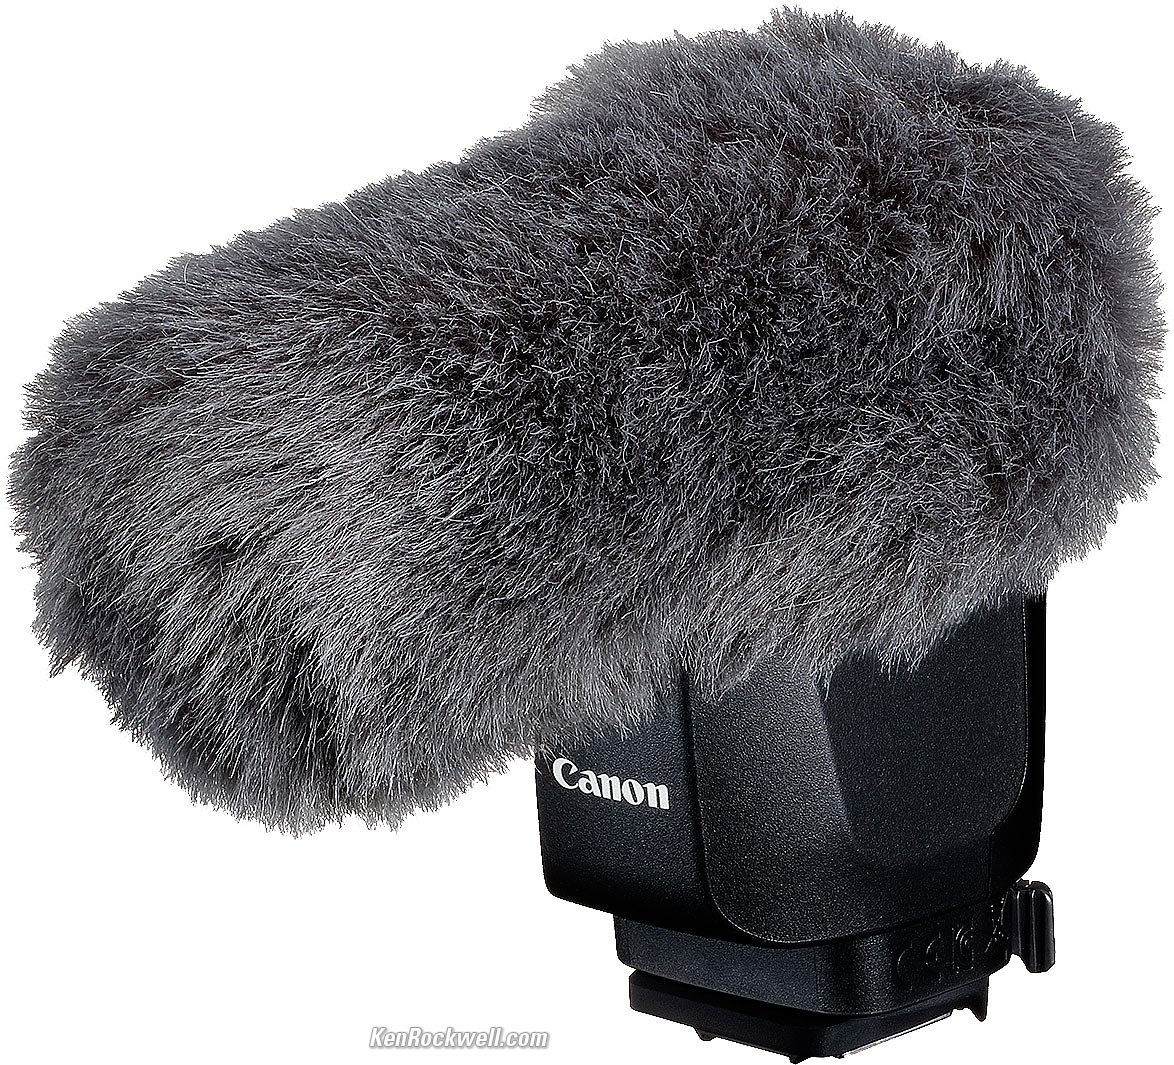 Canon DM-E1D Mic with fur